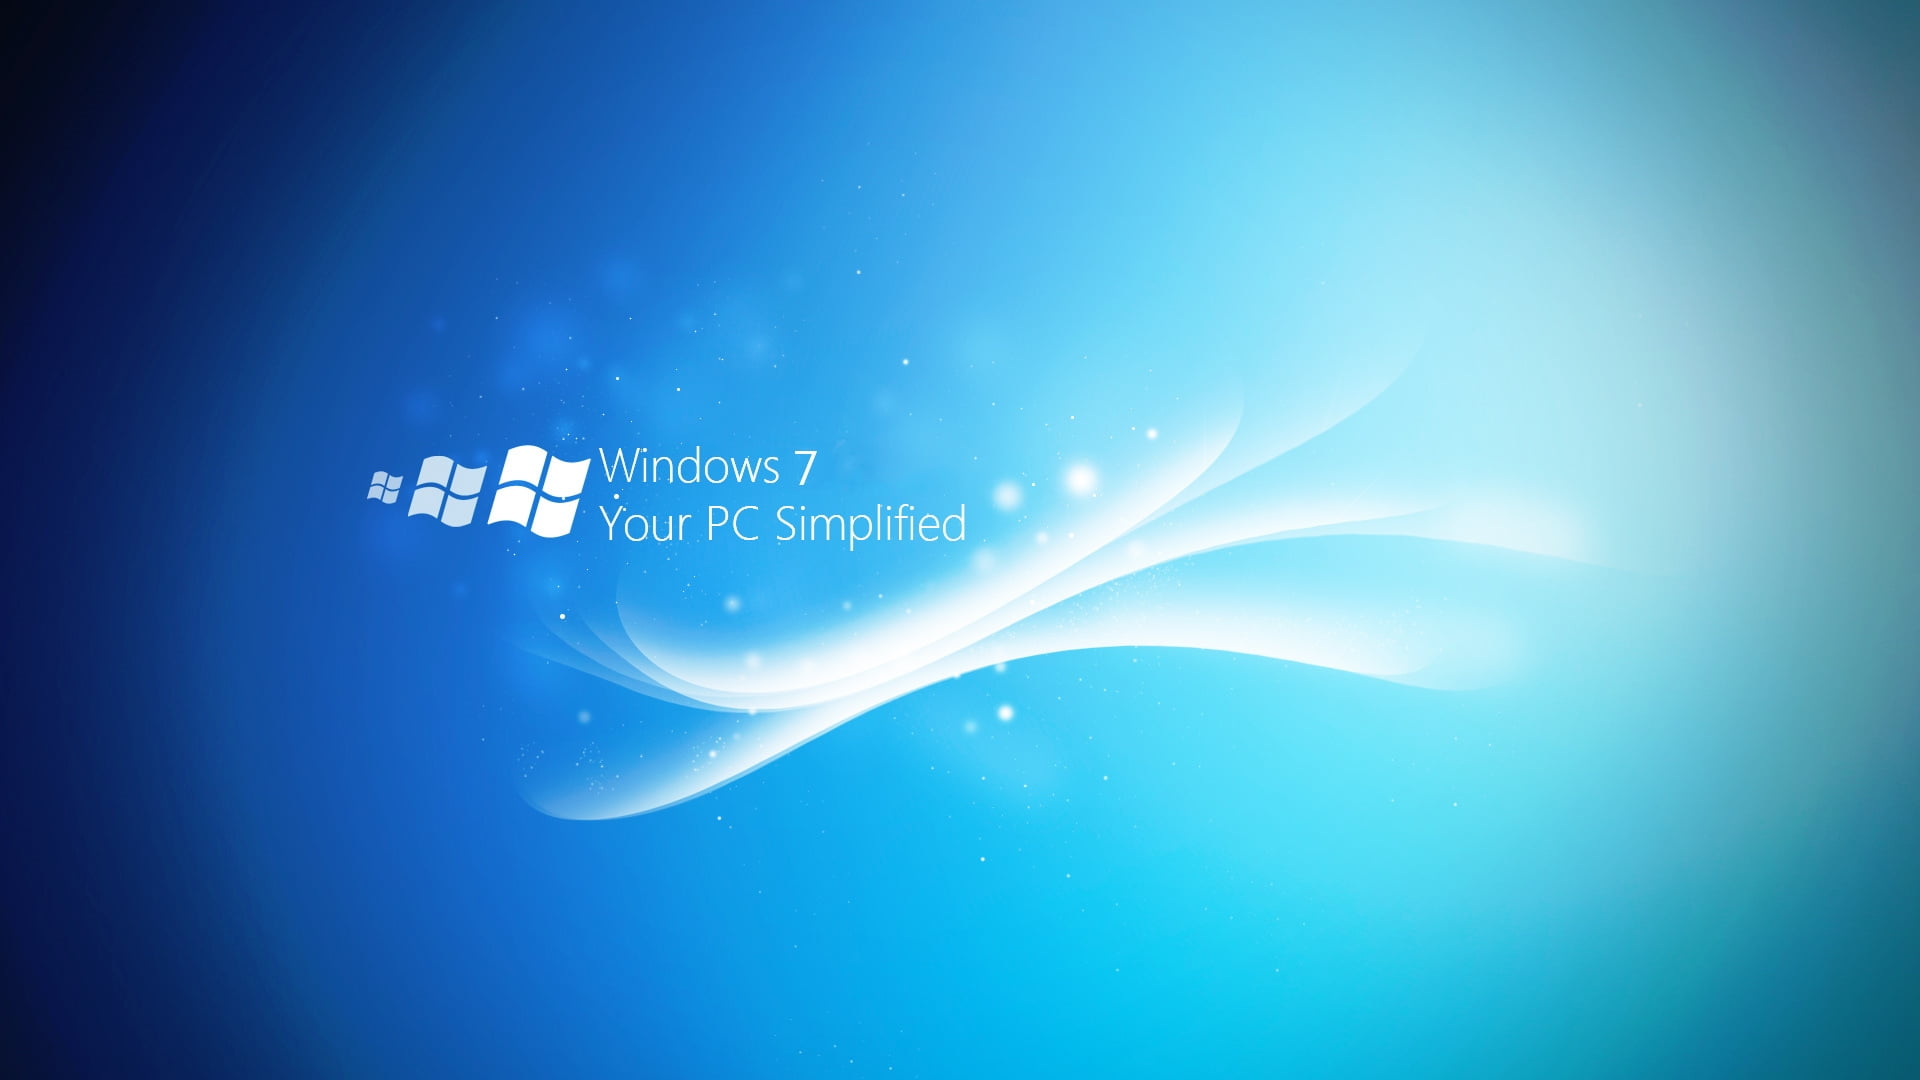 Windows 7 Your Pc Simplified Wallpaper Hd Wallpaper